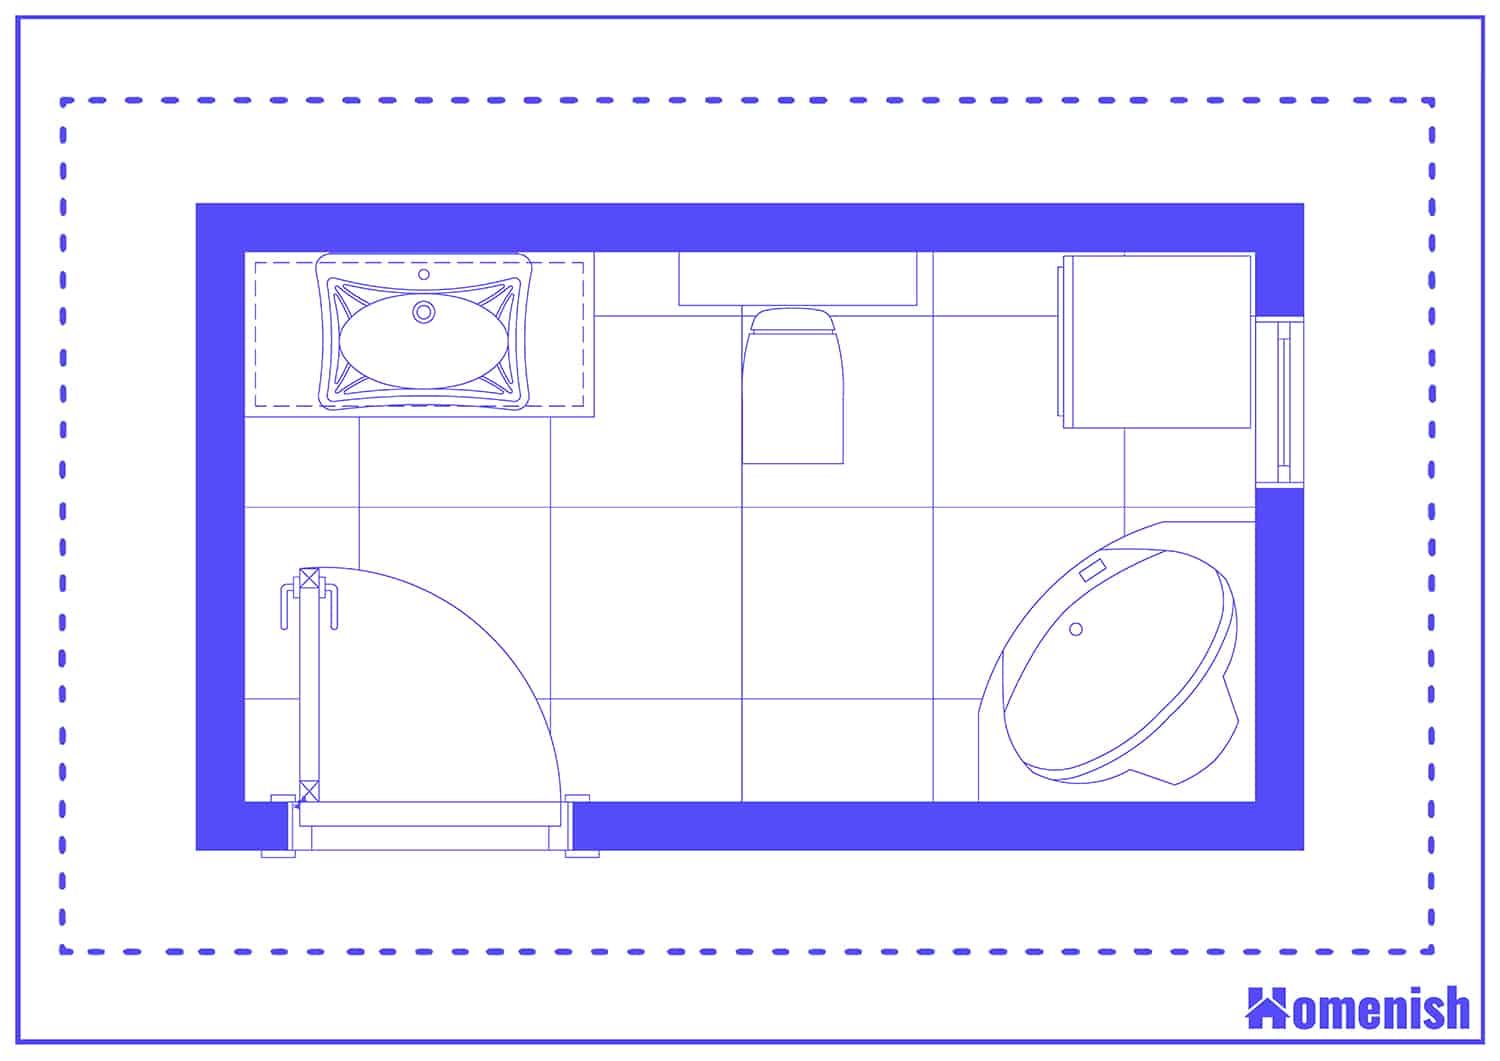 Traditional and Spacious Bathroom Floor Plan